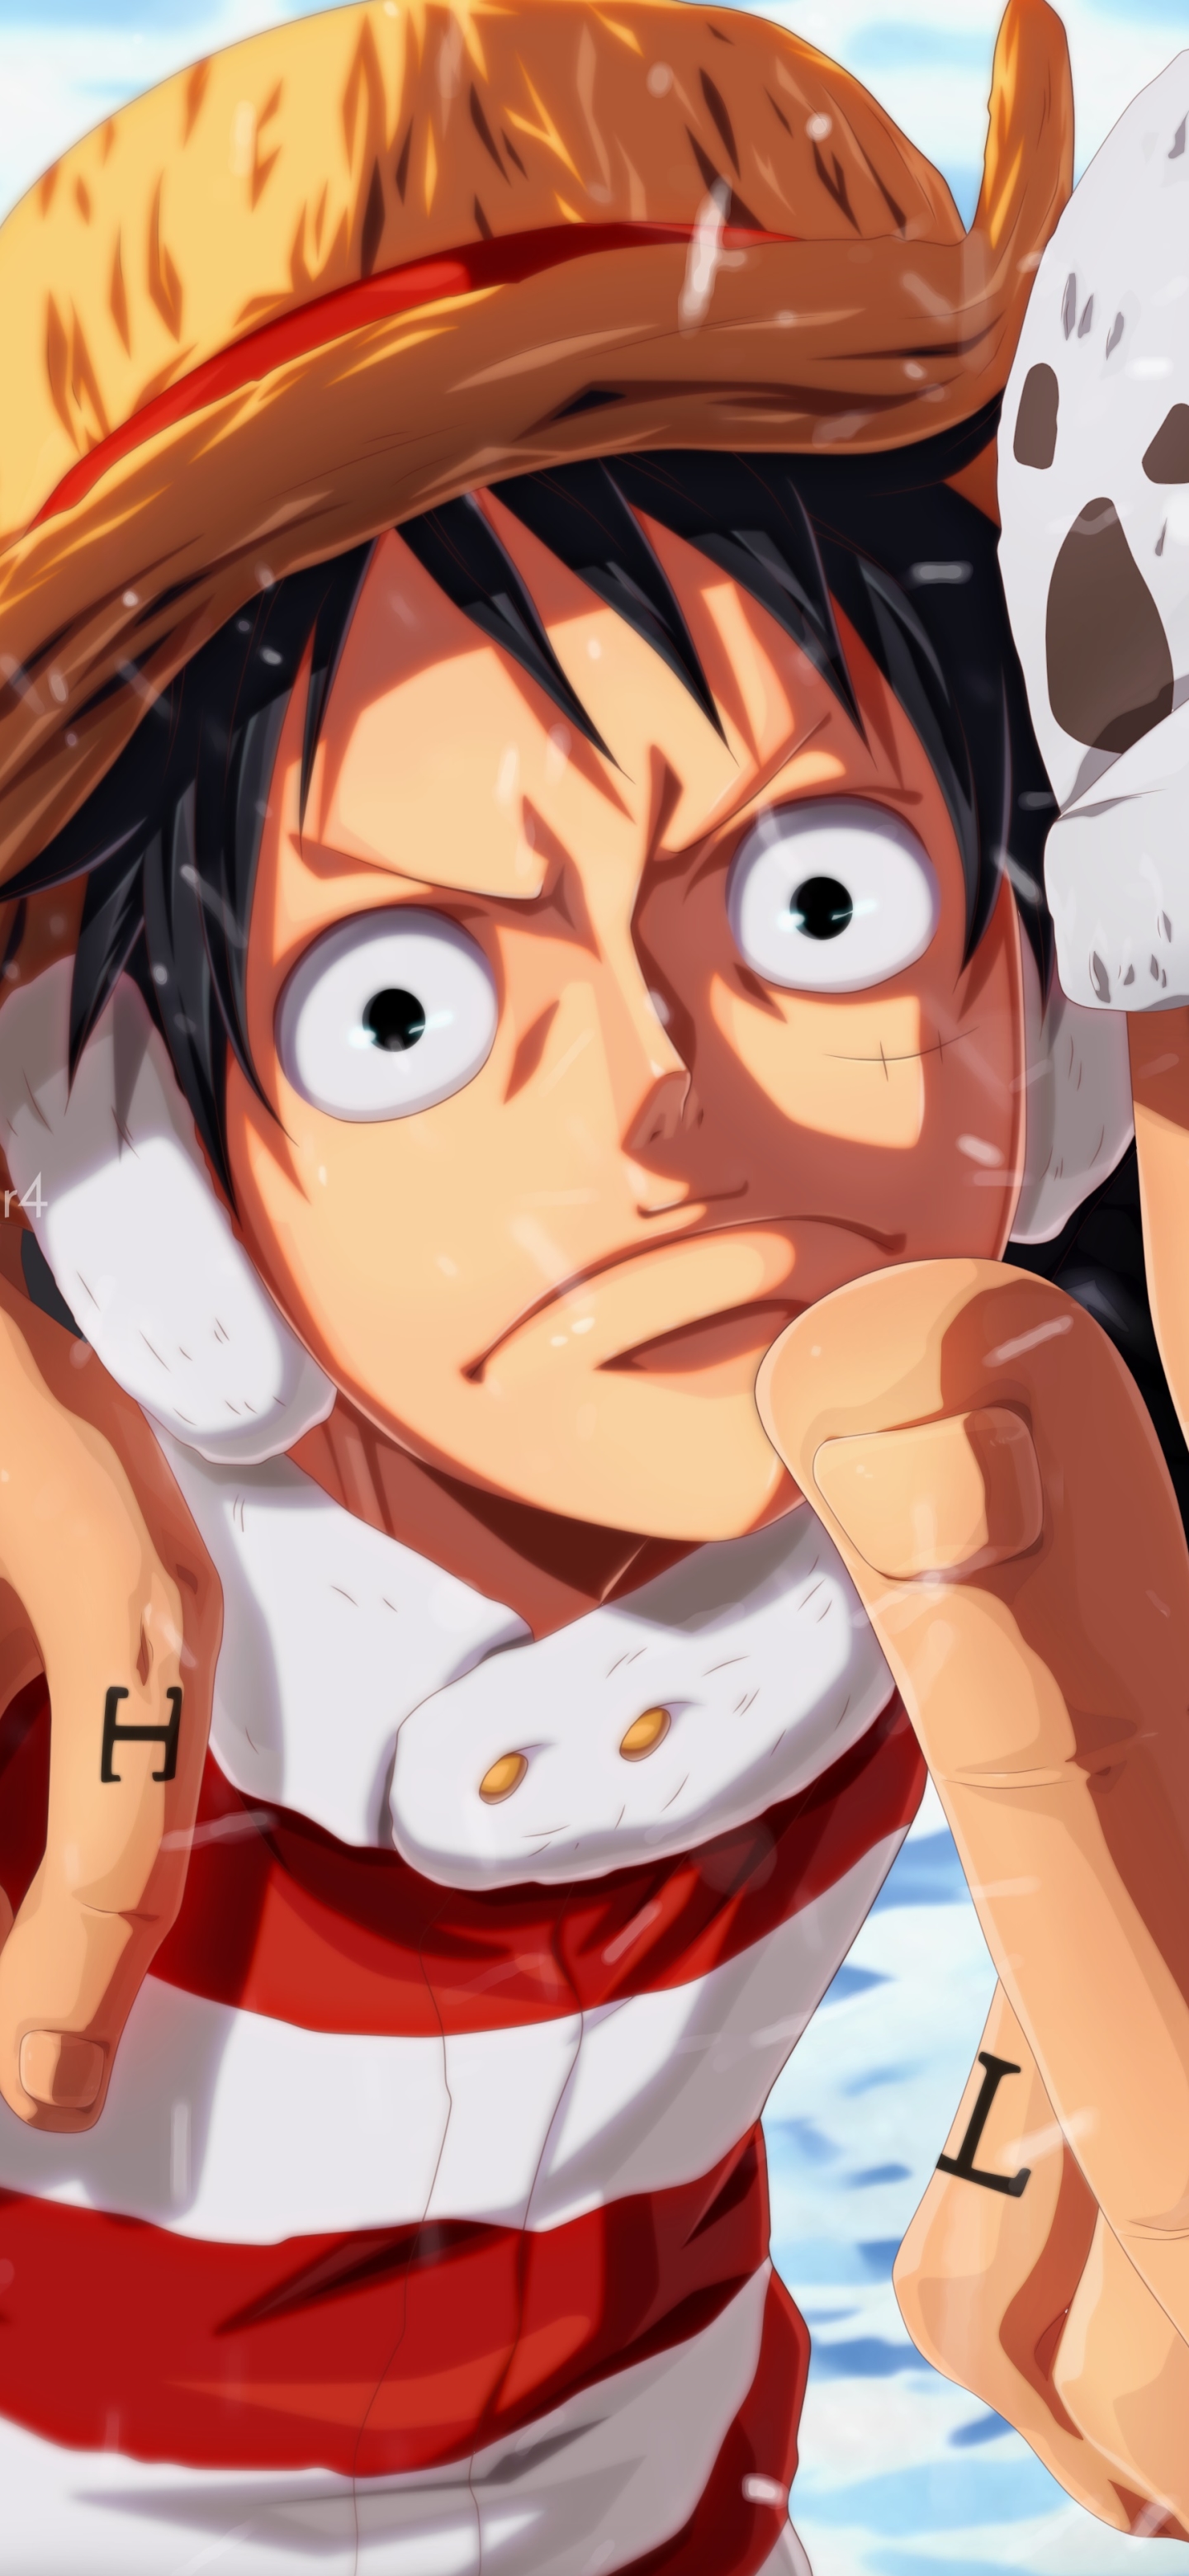 HD desktop wallpaper Anime One Piece Monkey D Luffy download free  picture 1183957